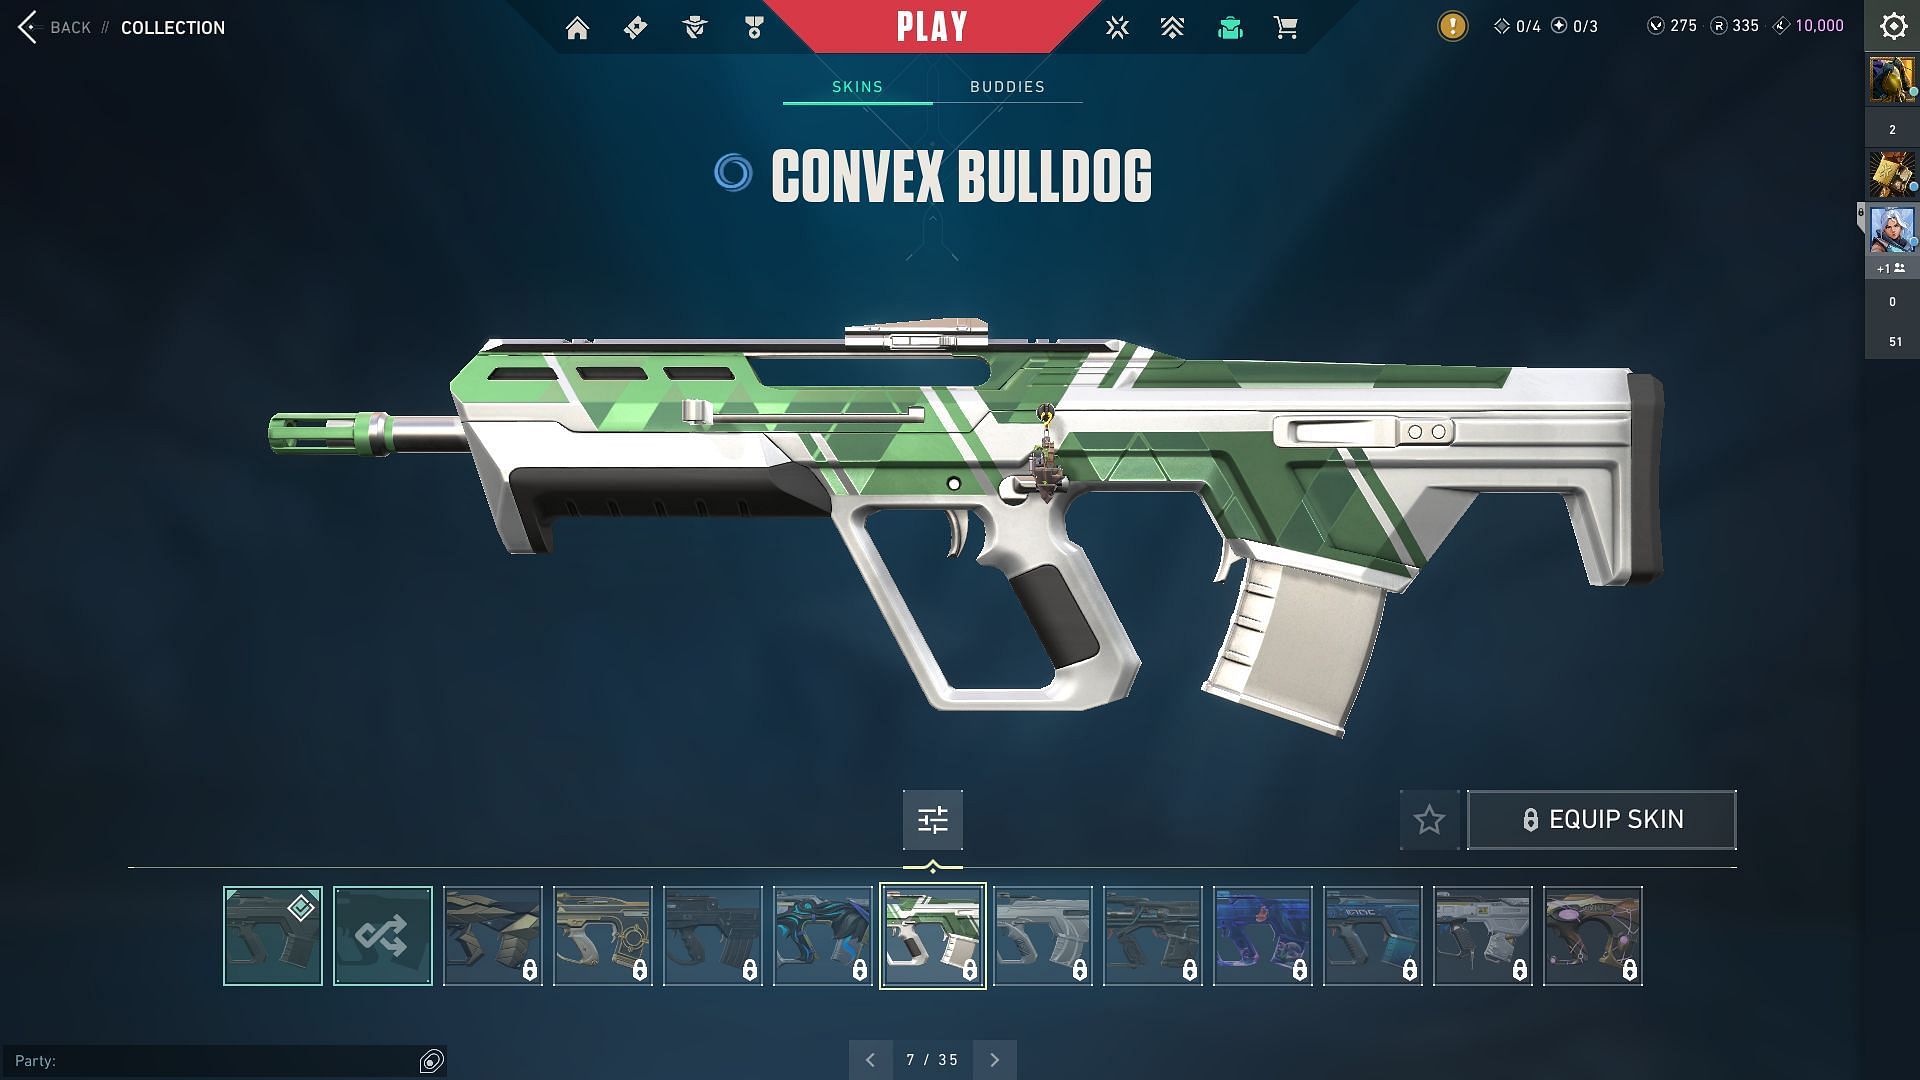 Convex Bulldog (Image via Sportskeeda and Riot Games)